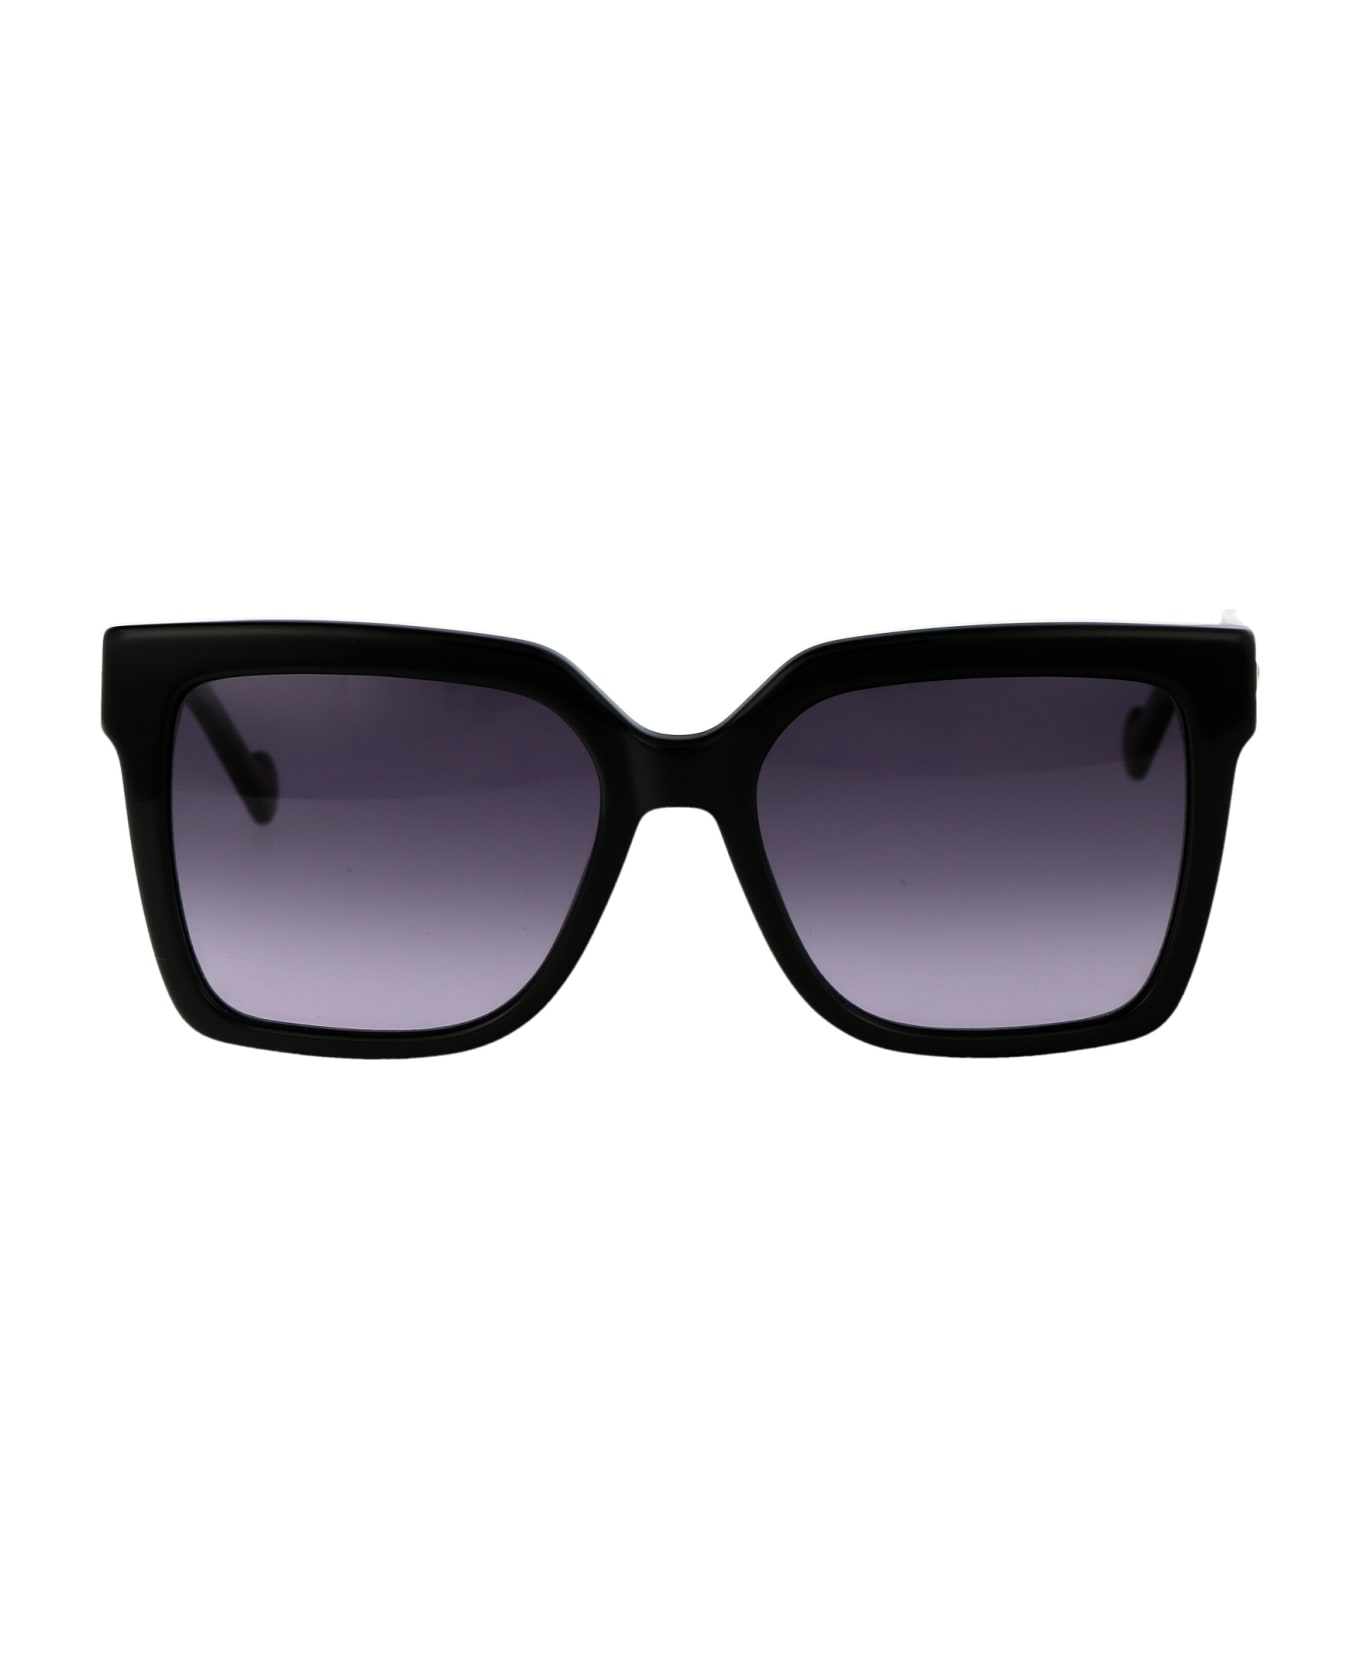 Liu-Jo Lj771s Sunglasses - 001 BLACK